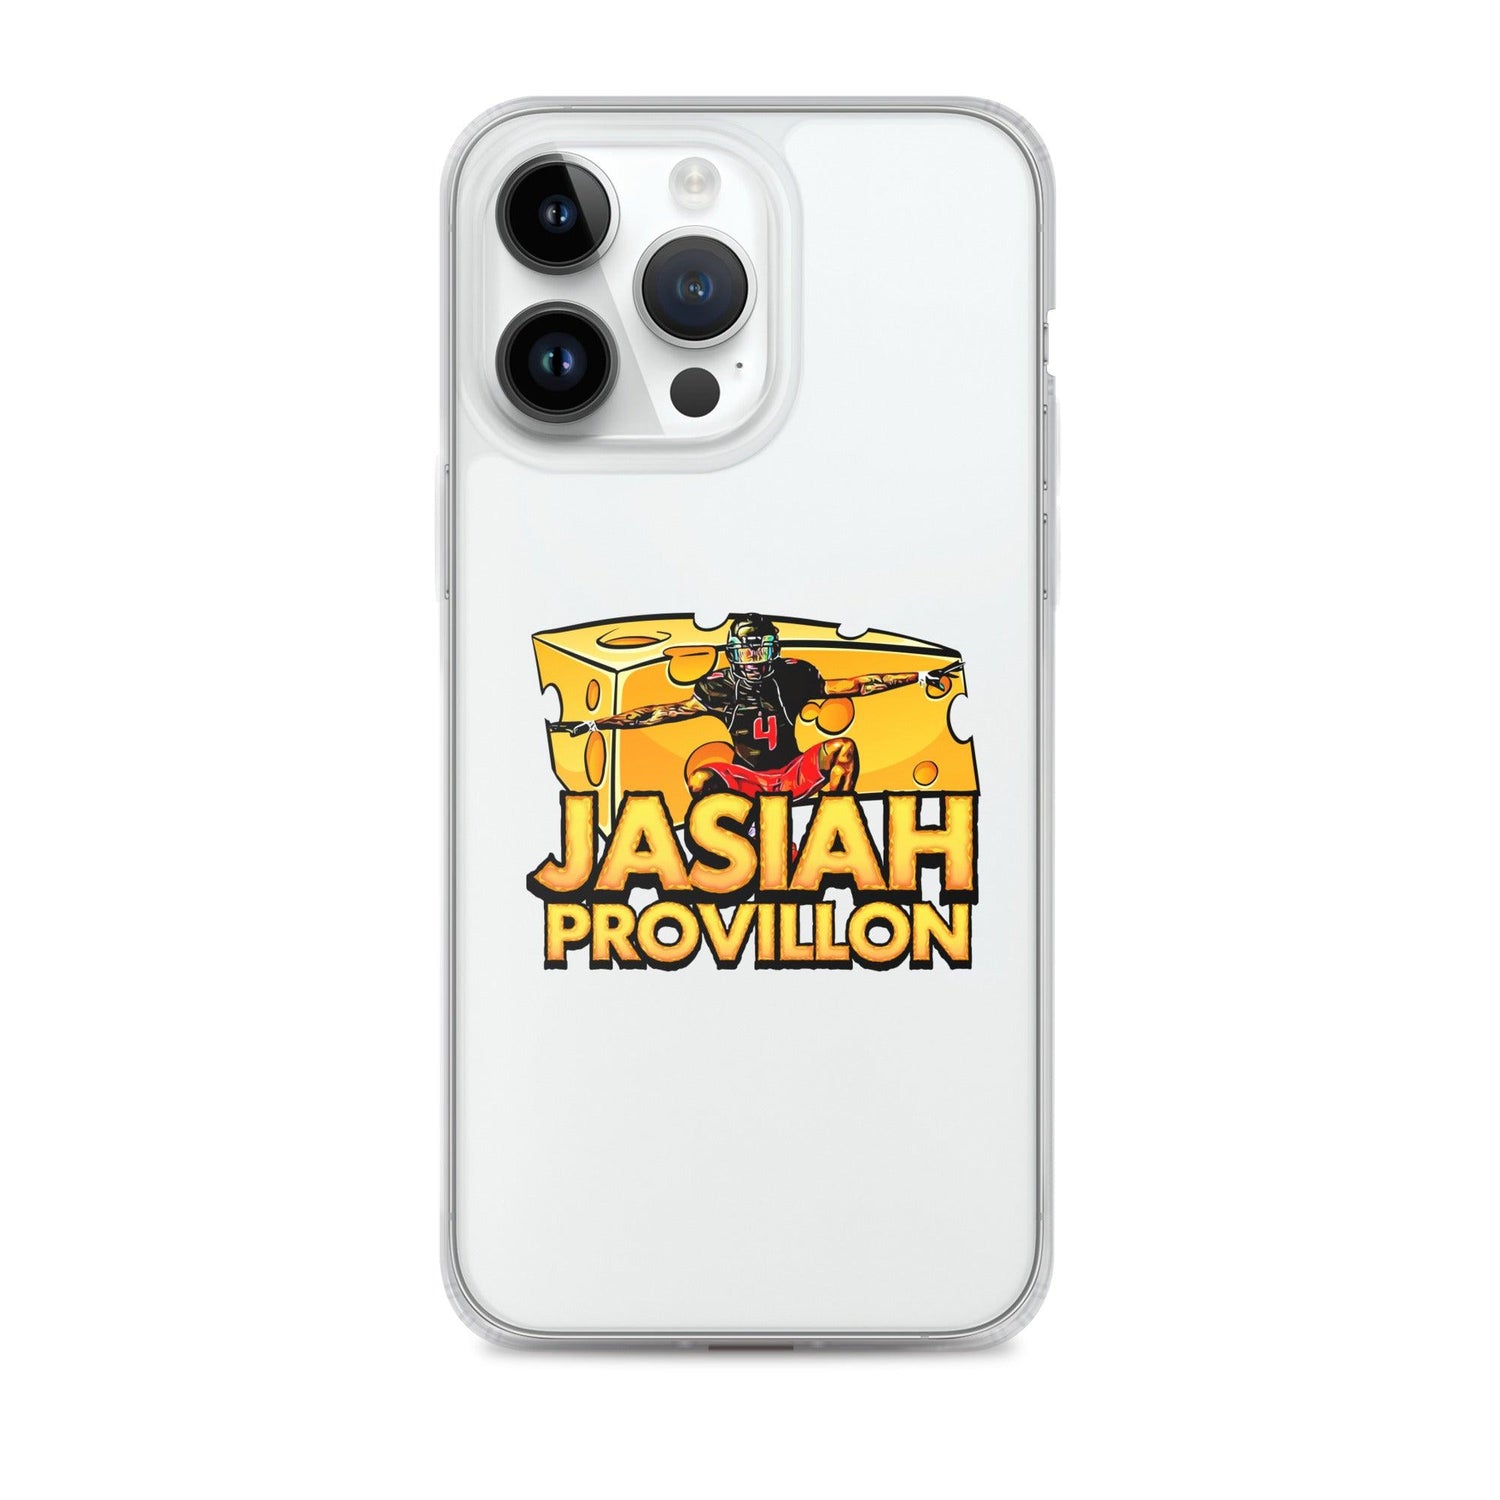 Jasiah Provillon "Cheese" iPhone® - Fan Arch